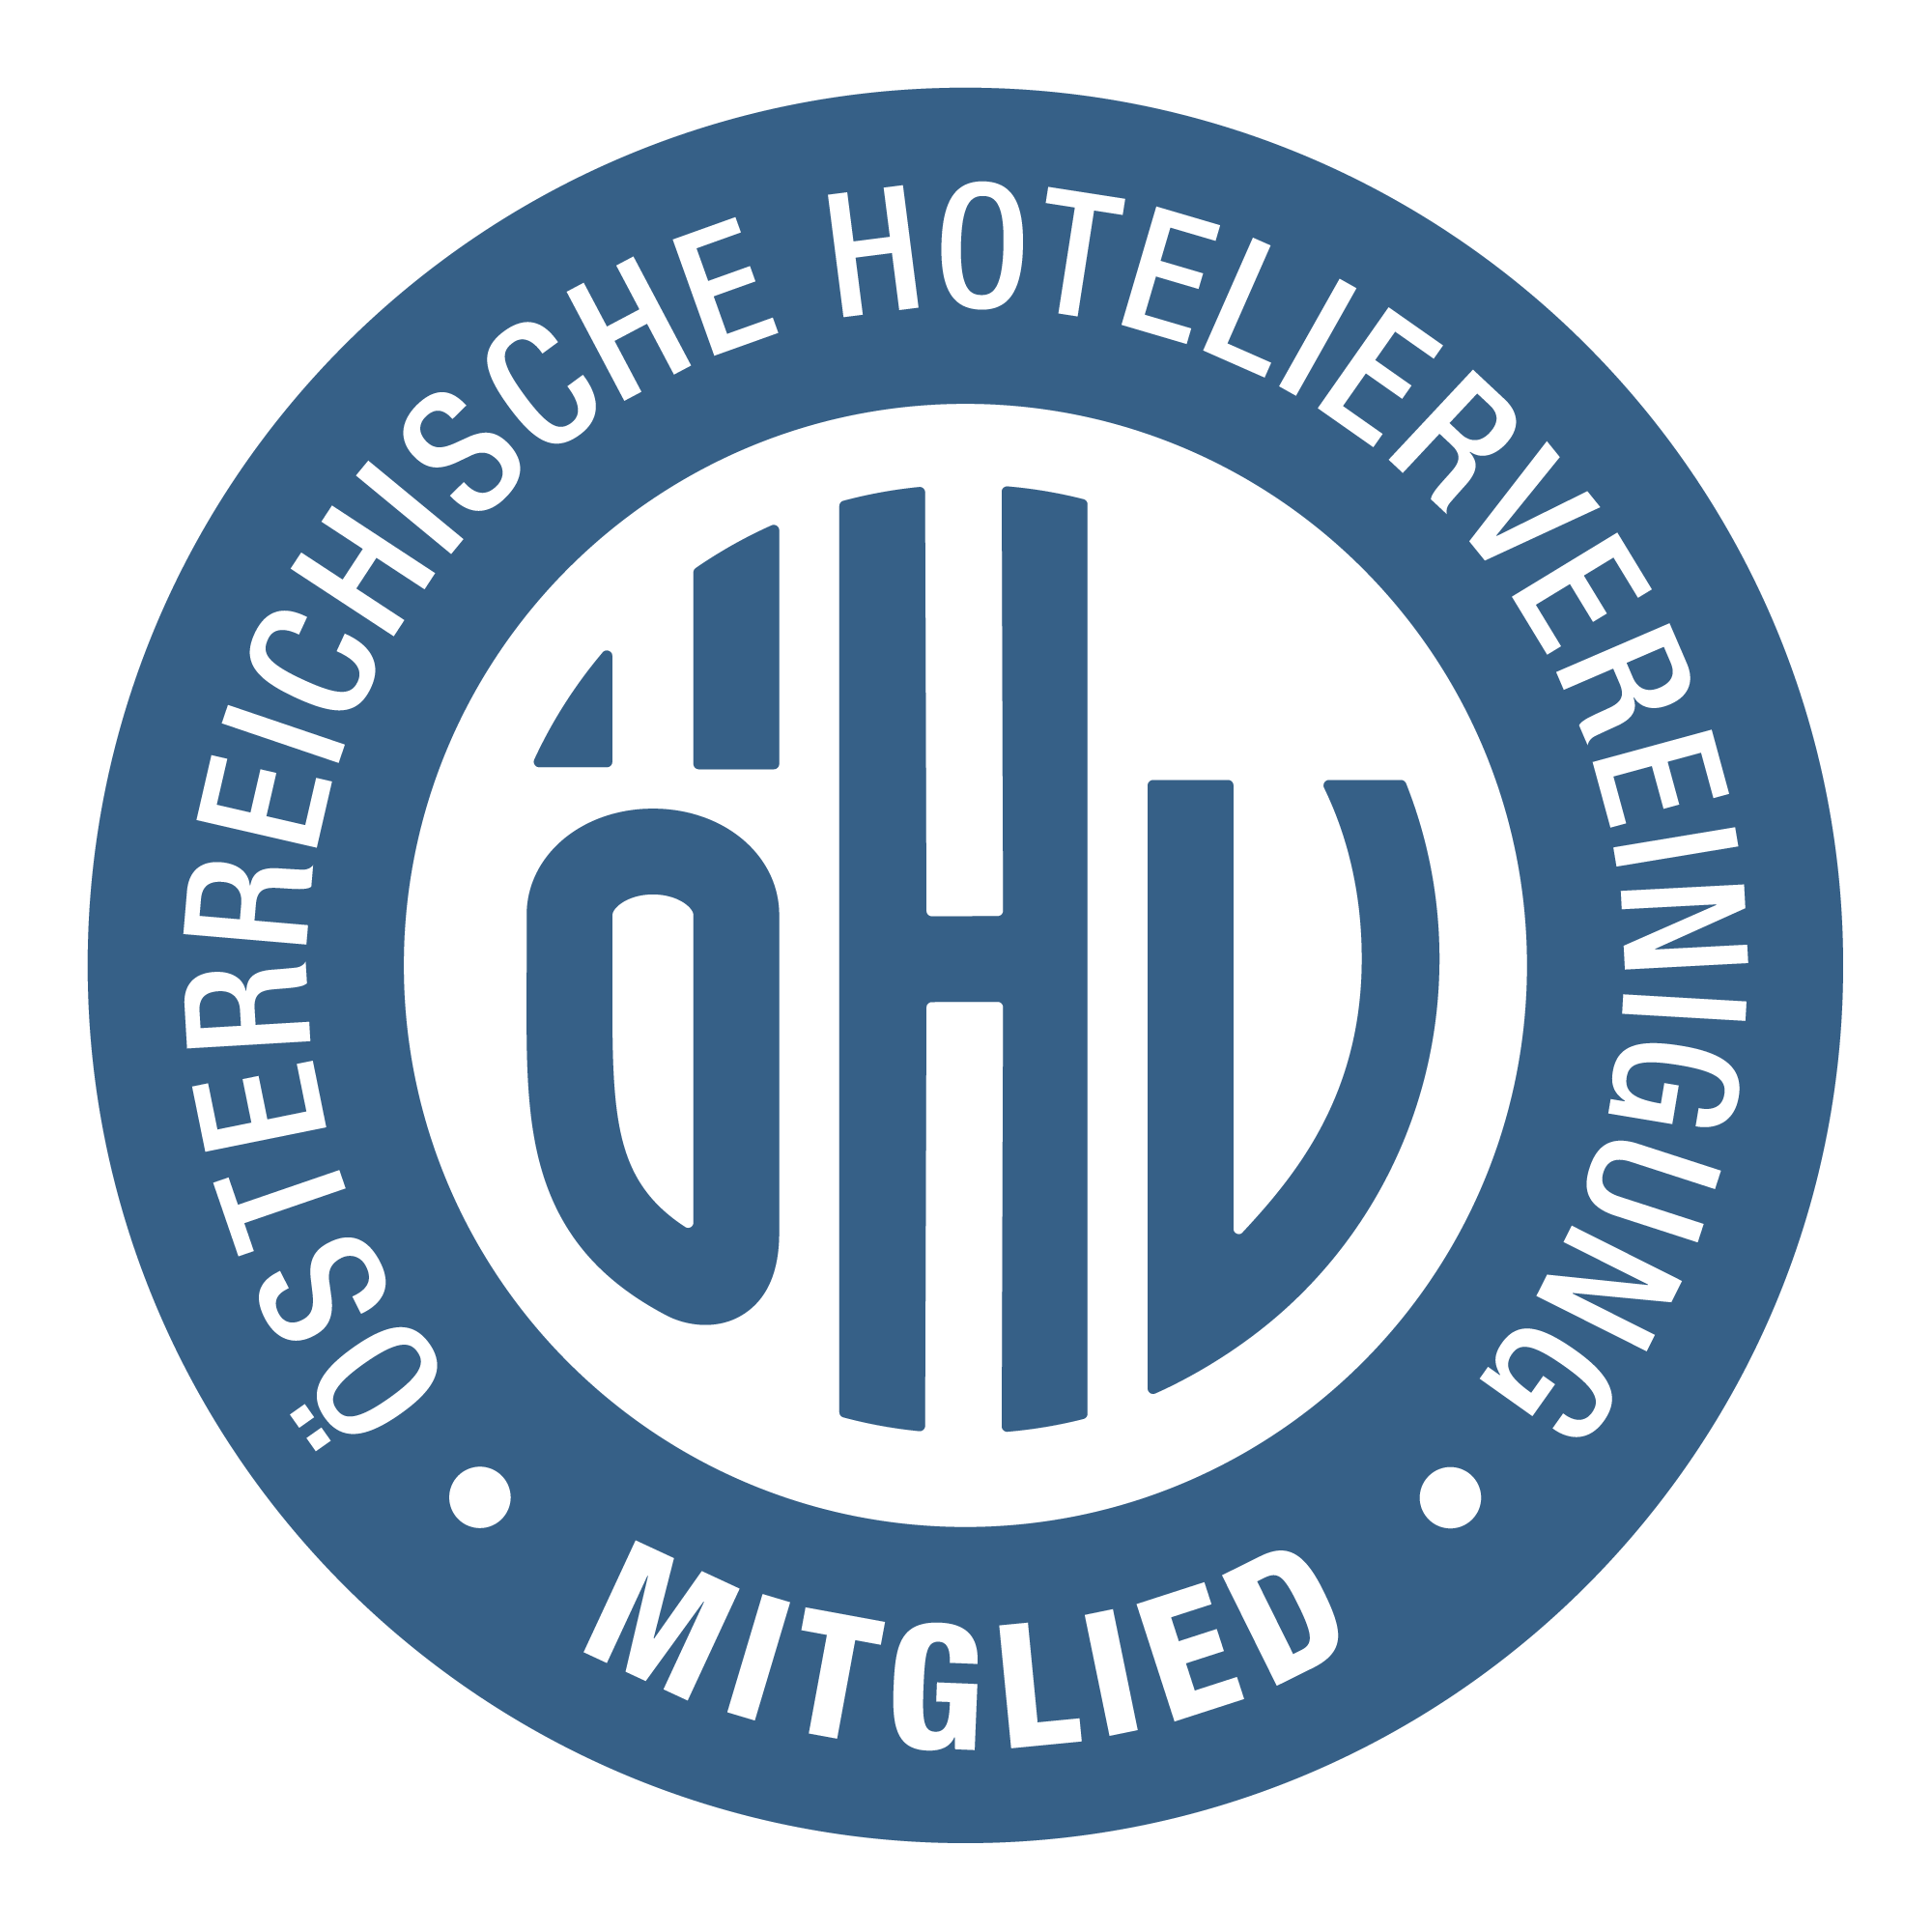 ÖHV Logo